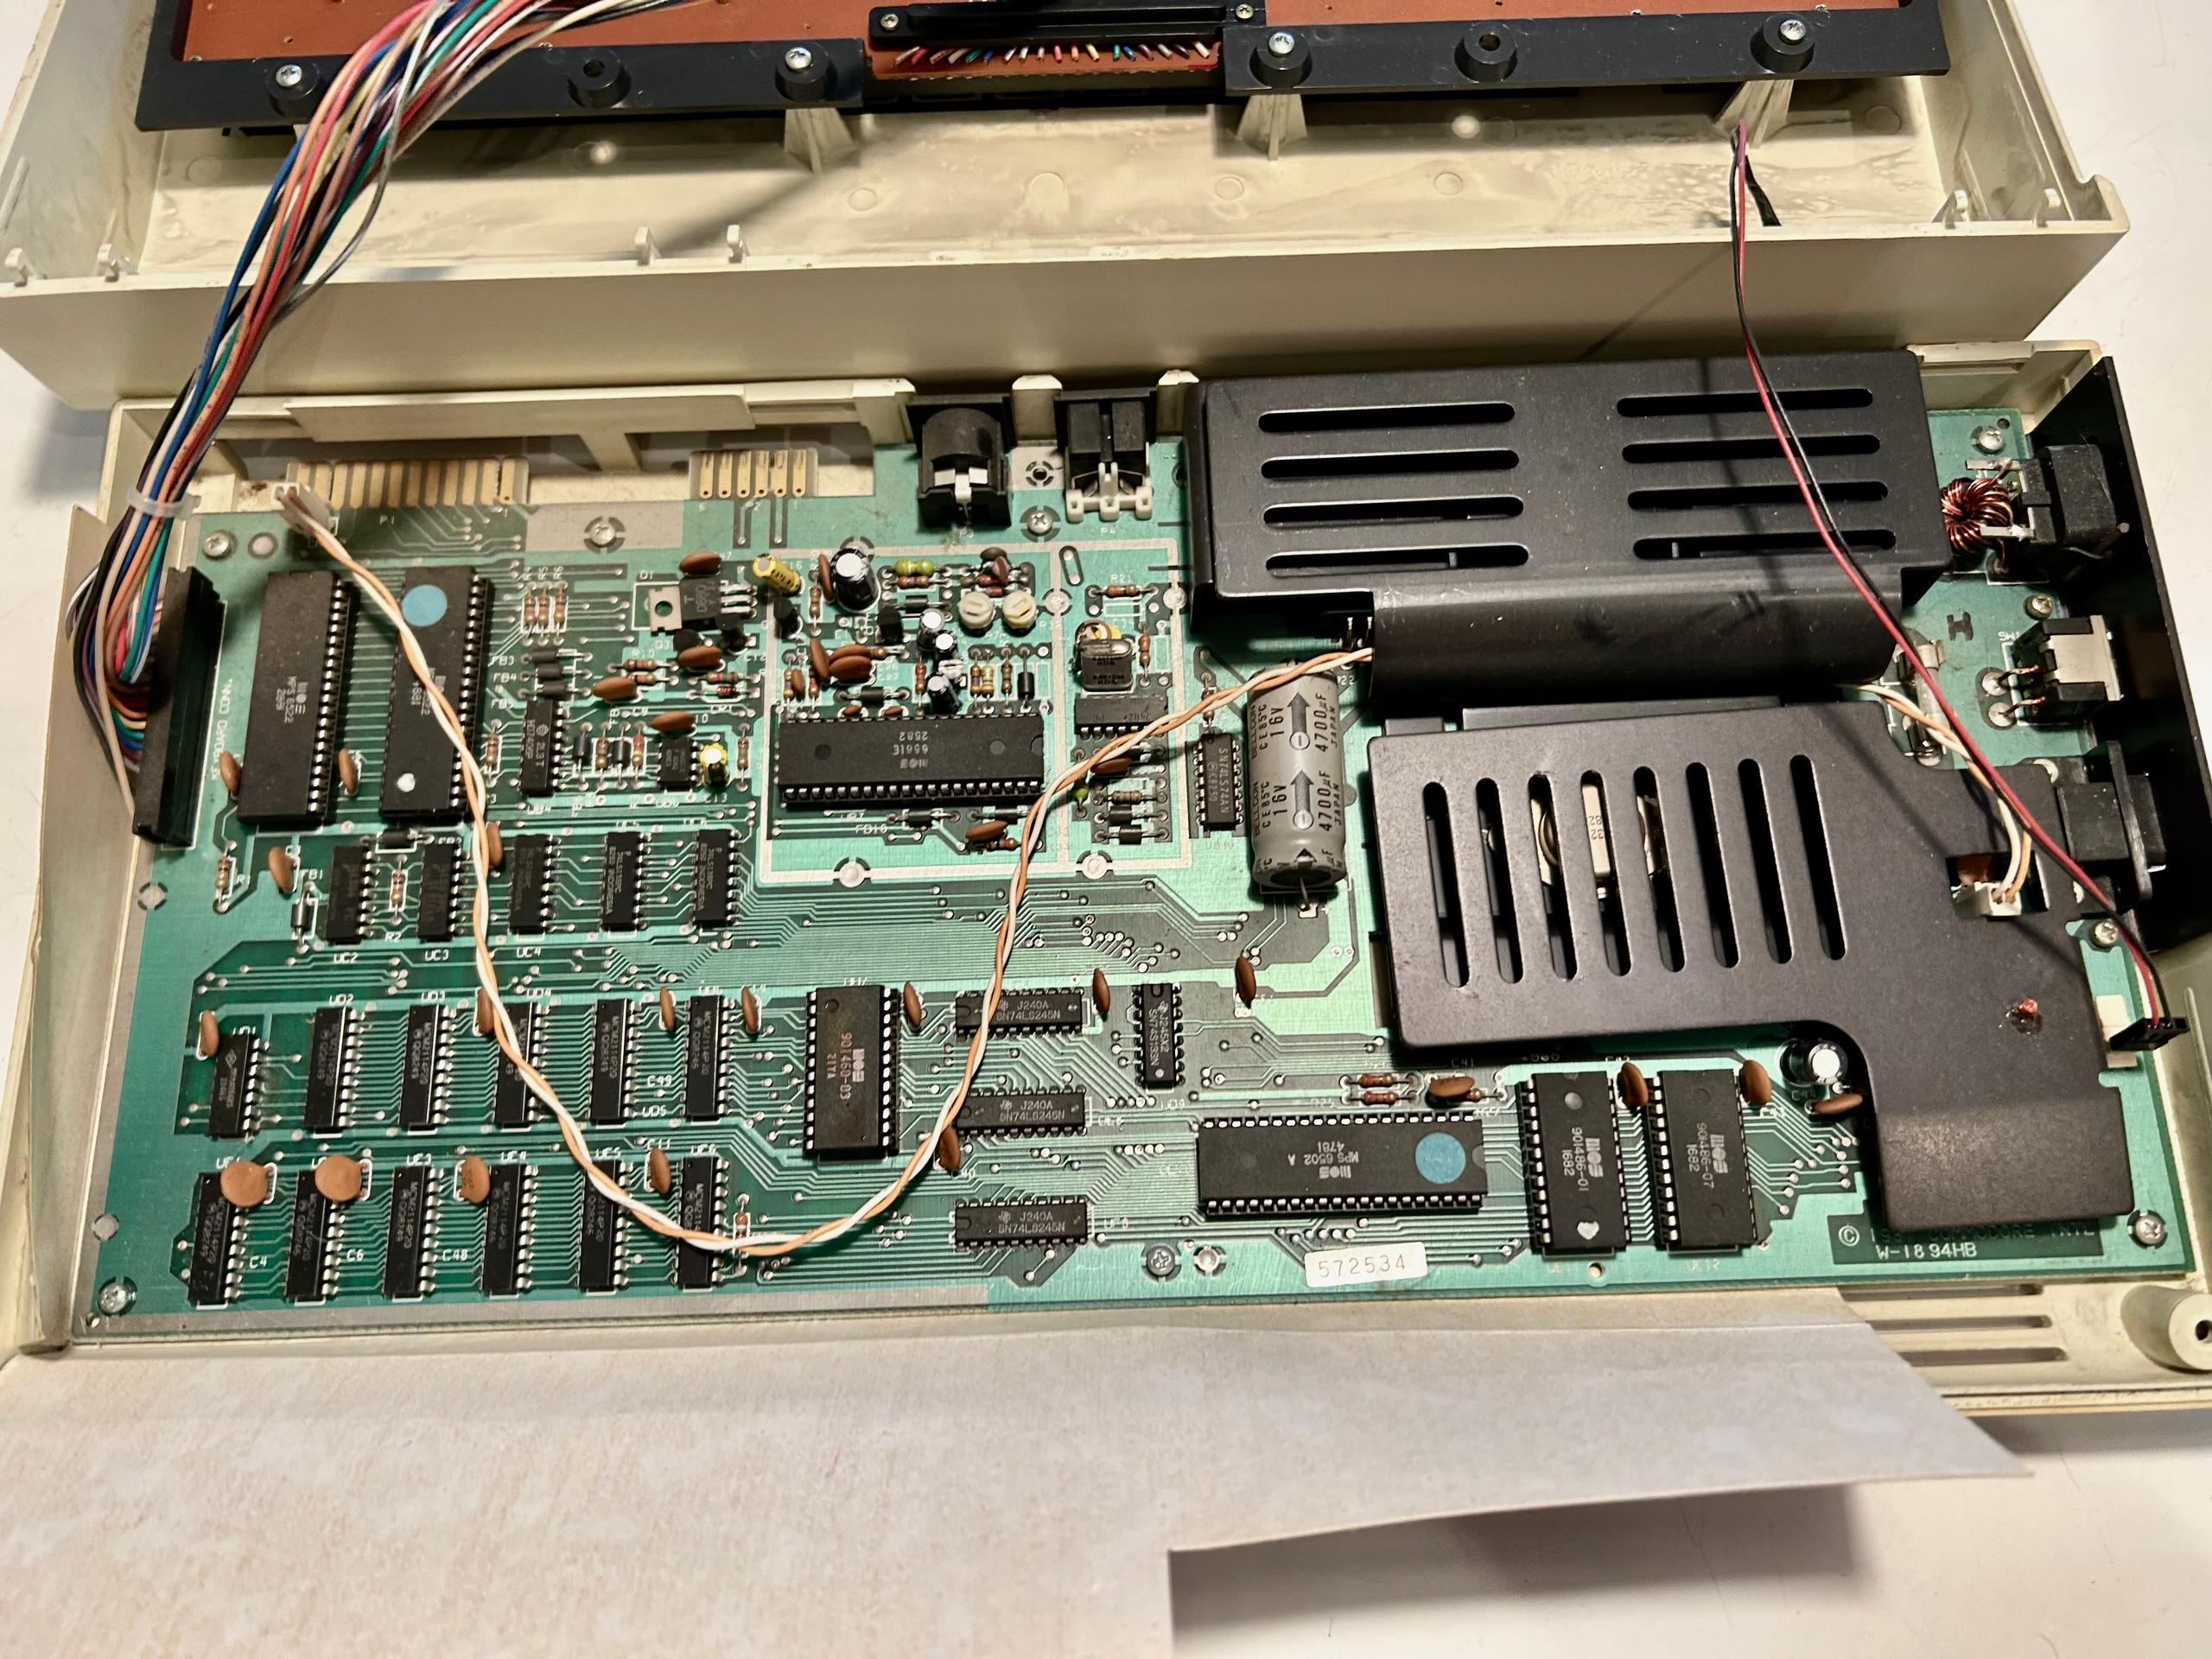 Commodore VC20 EUROSTYLE KEYBOARD in original box